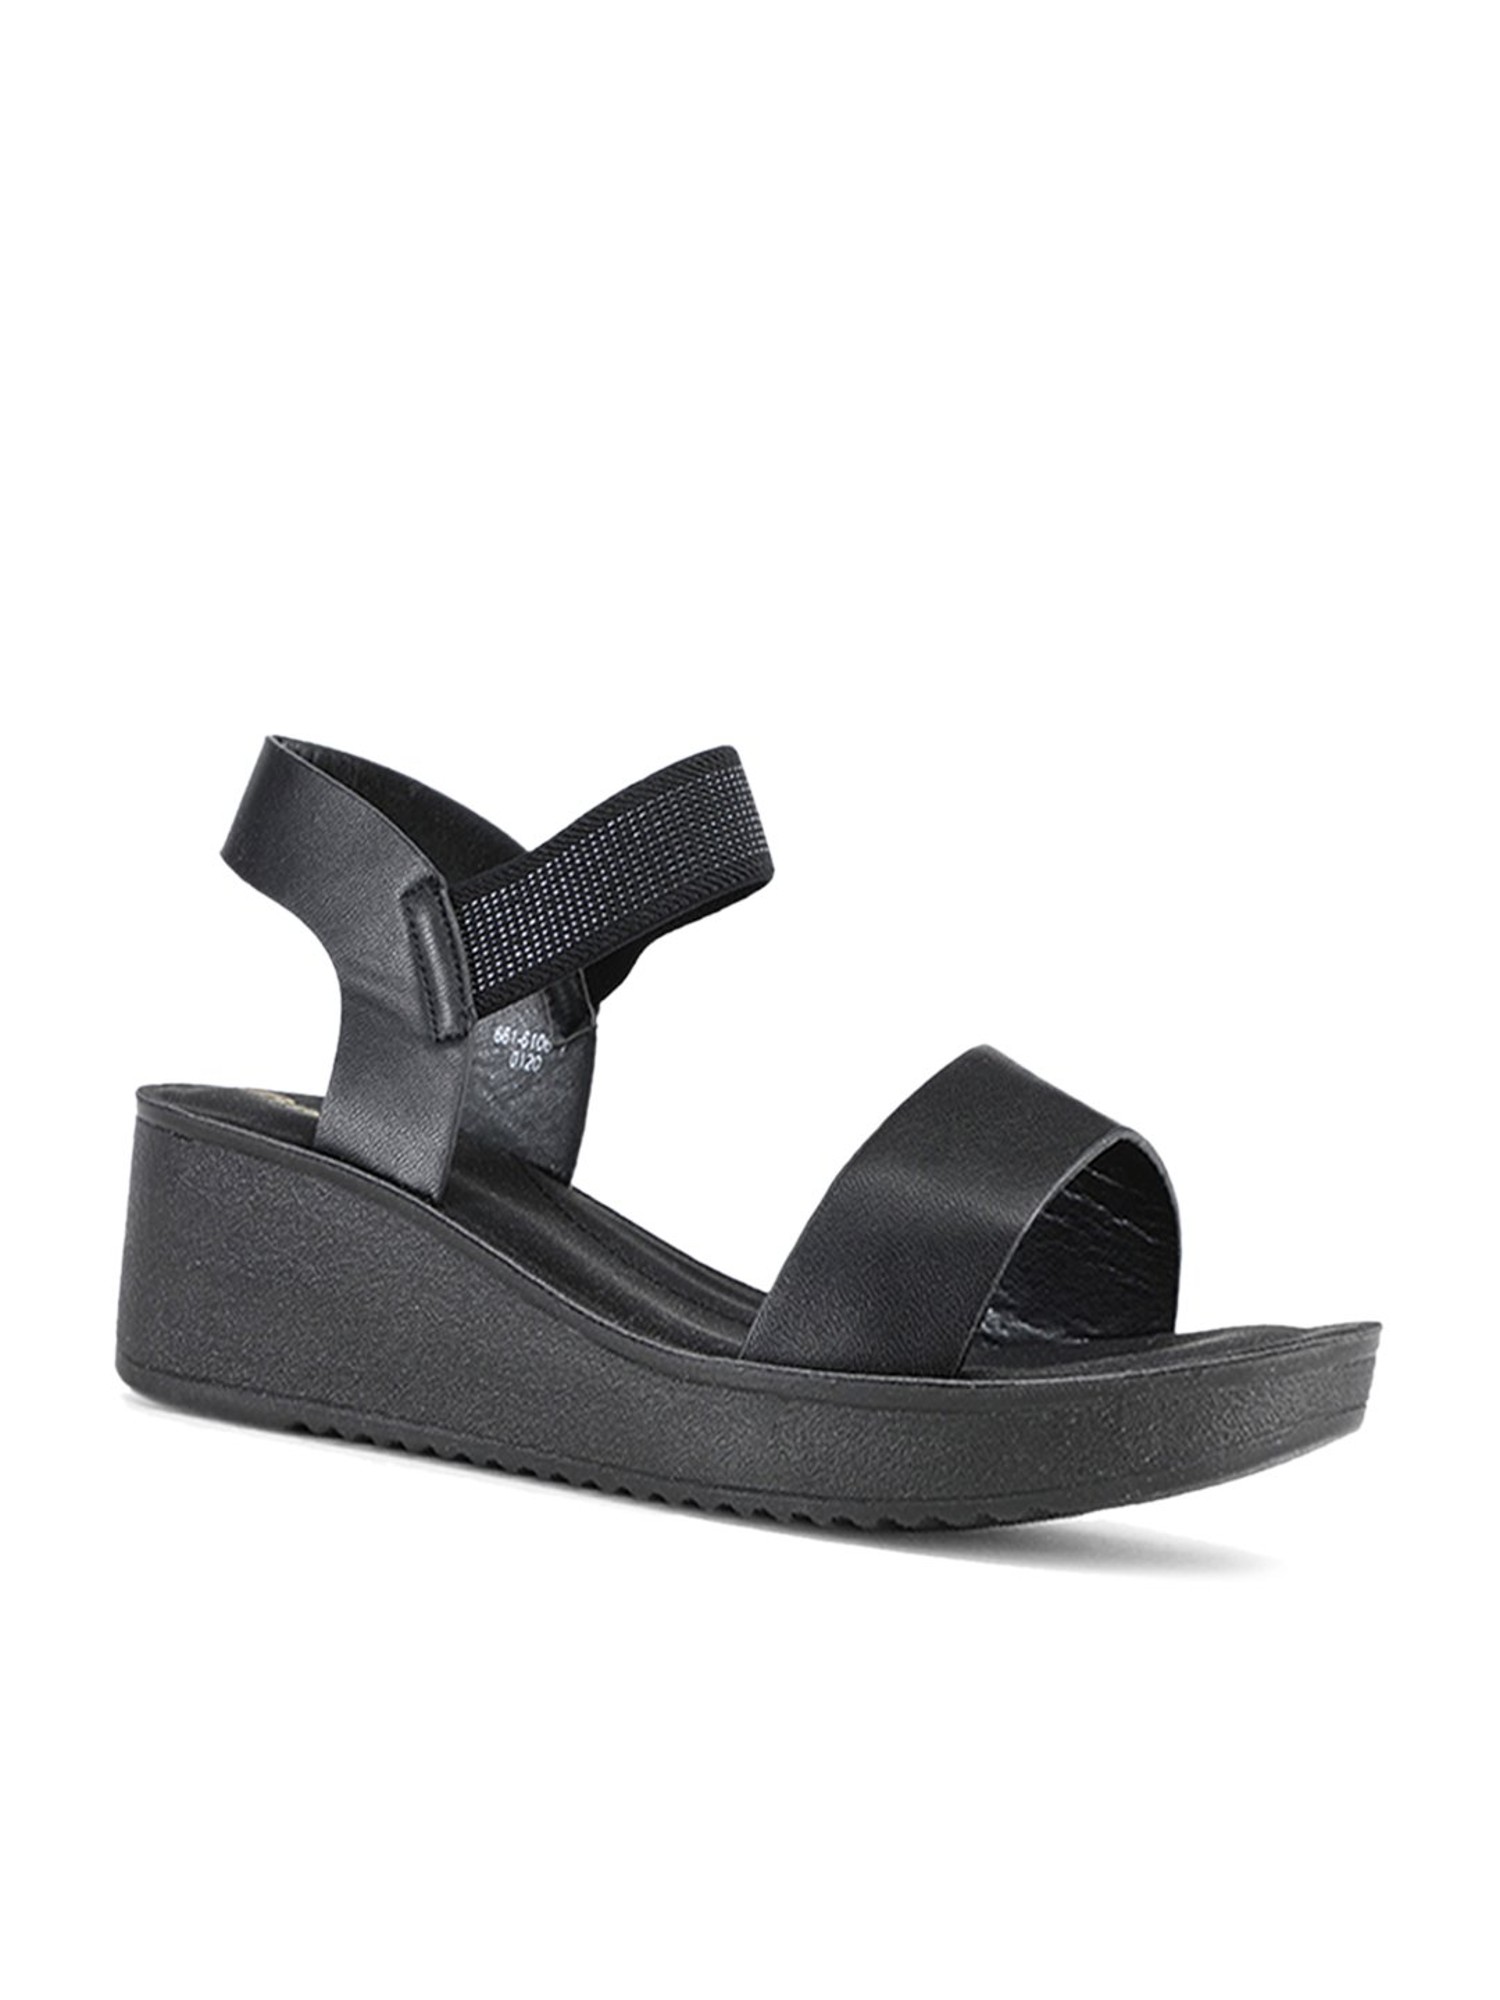 Buy Women Black Heels Sandal online  Looksgudin